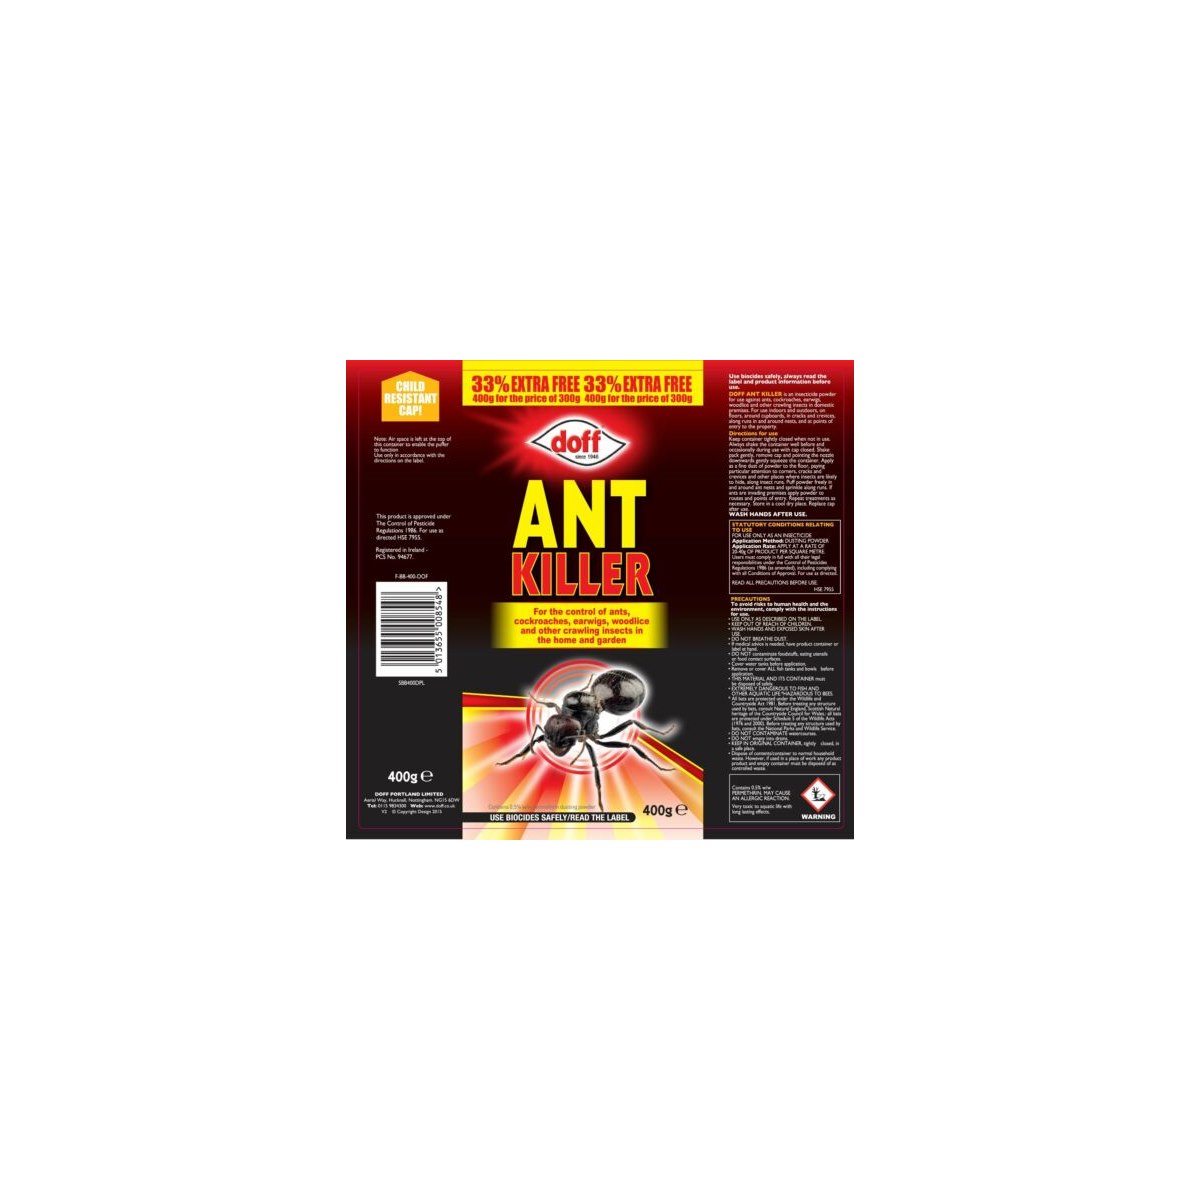 How to Use Doff Ant Killer Powder